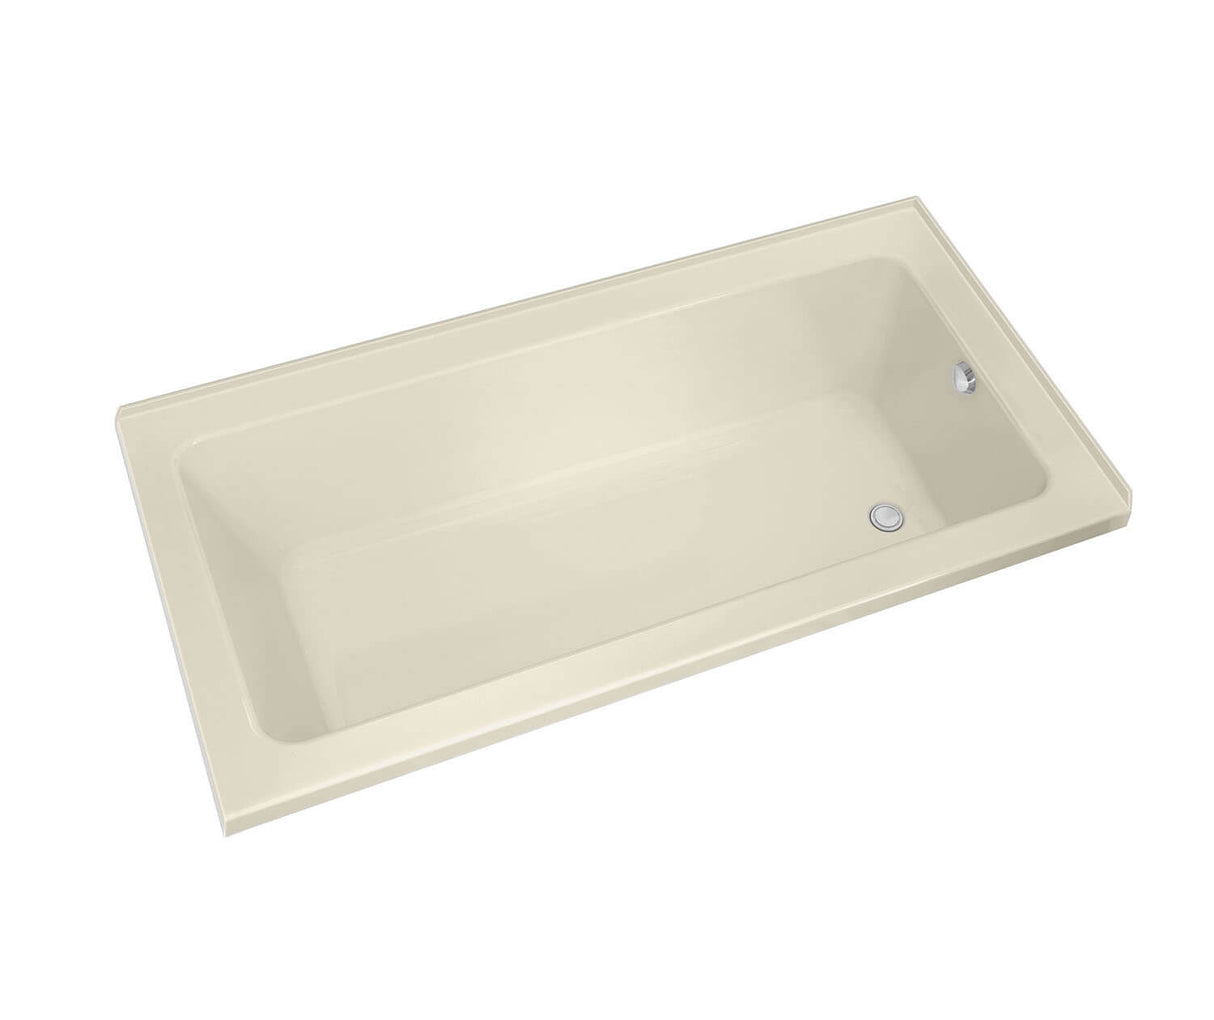 MAAX 106212-R-003-004 Pose 7236 IF Acrylic Corner Right Right-Hand Drain Whirlpool Bathtub in Bone